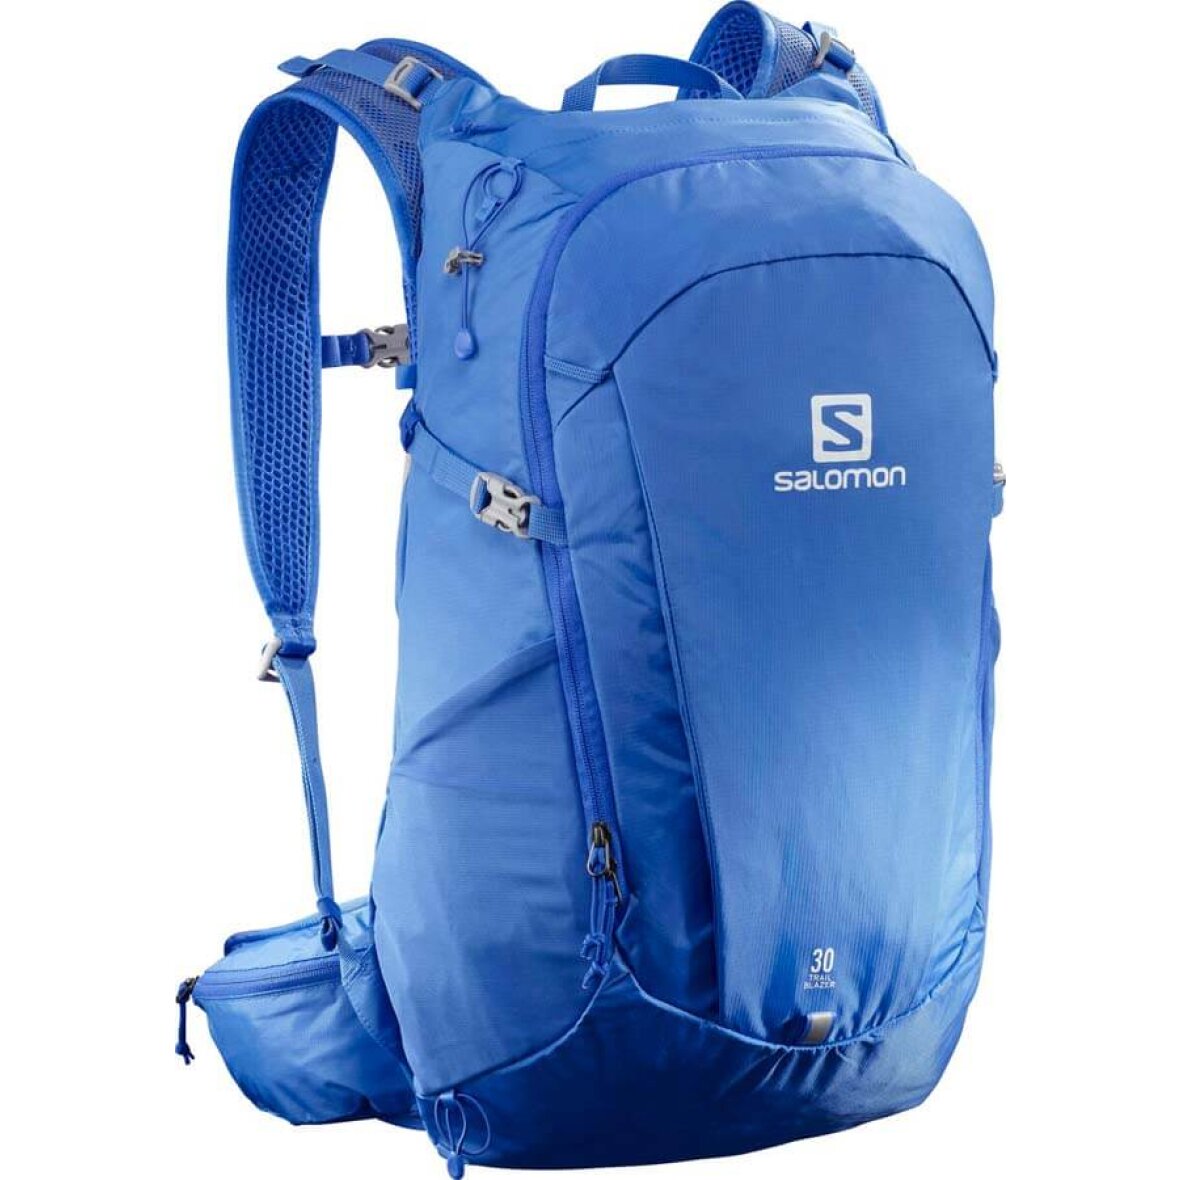 Derfra deres festspil Salomon Trailblazer 30 - Ensfarvet blå rygsæk fra Salomon - Køb den her!